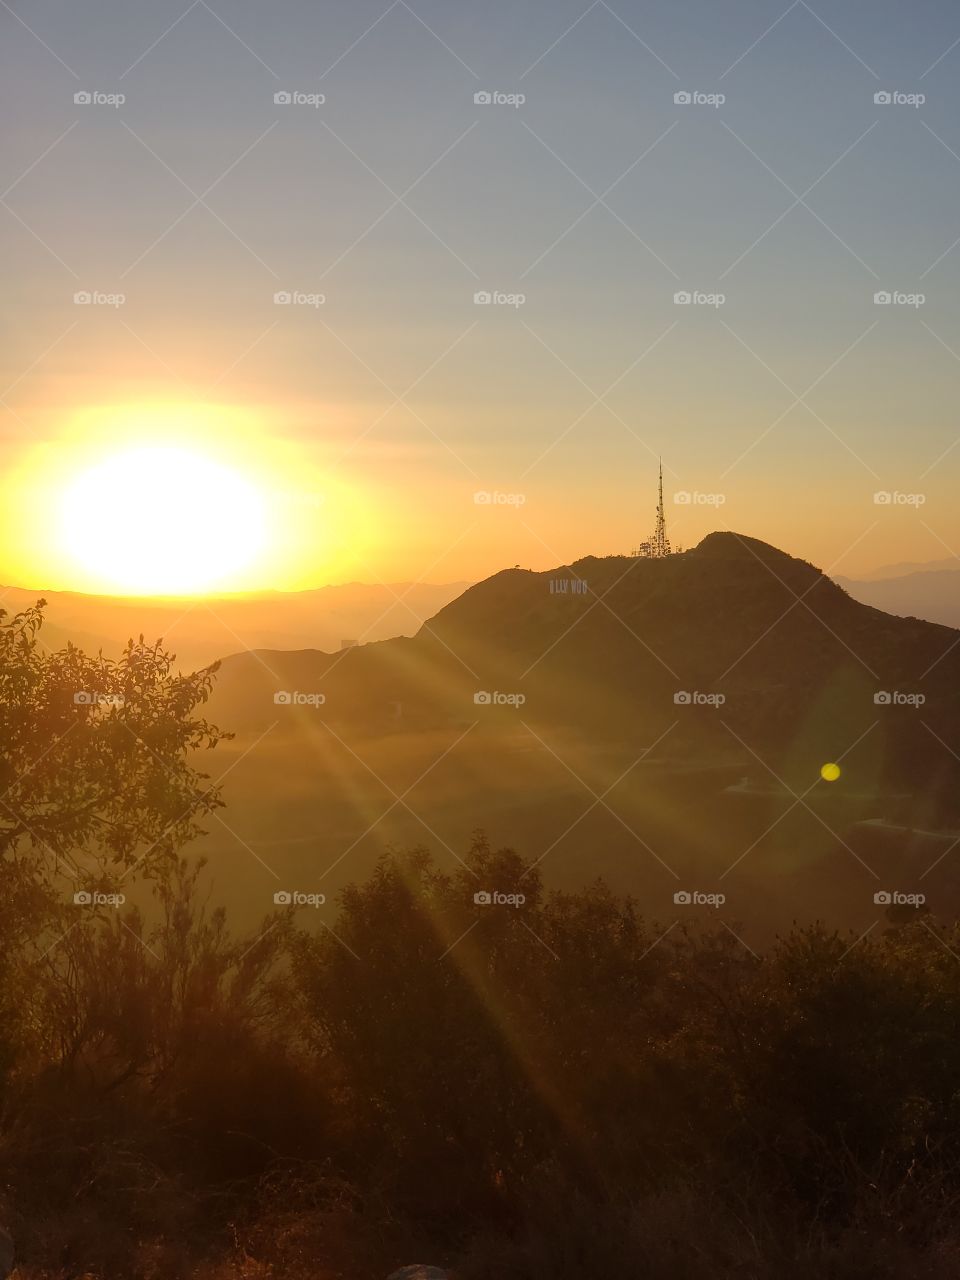 Hollywood Hills Sunset